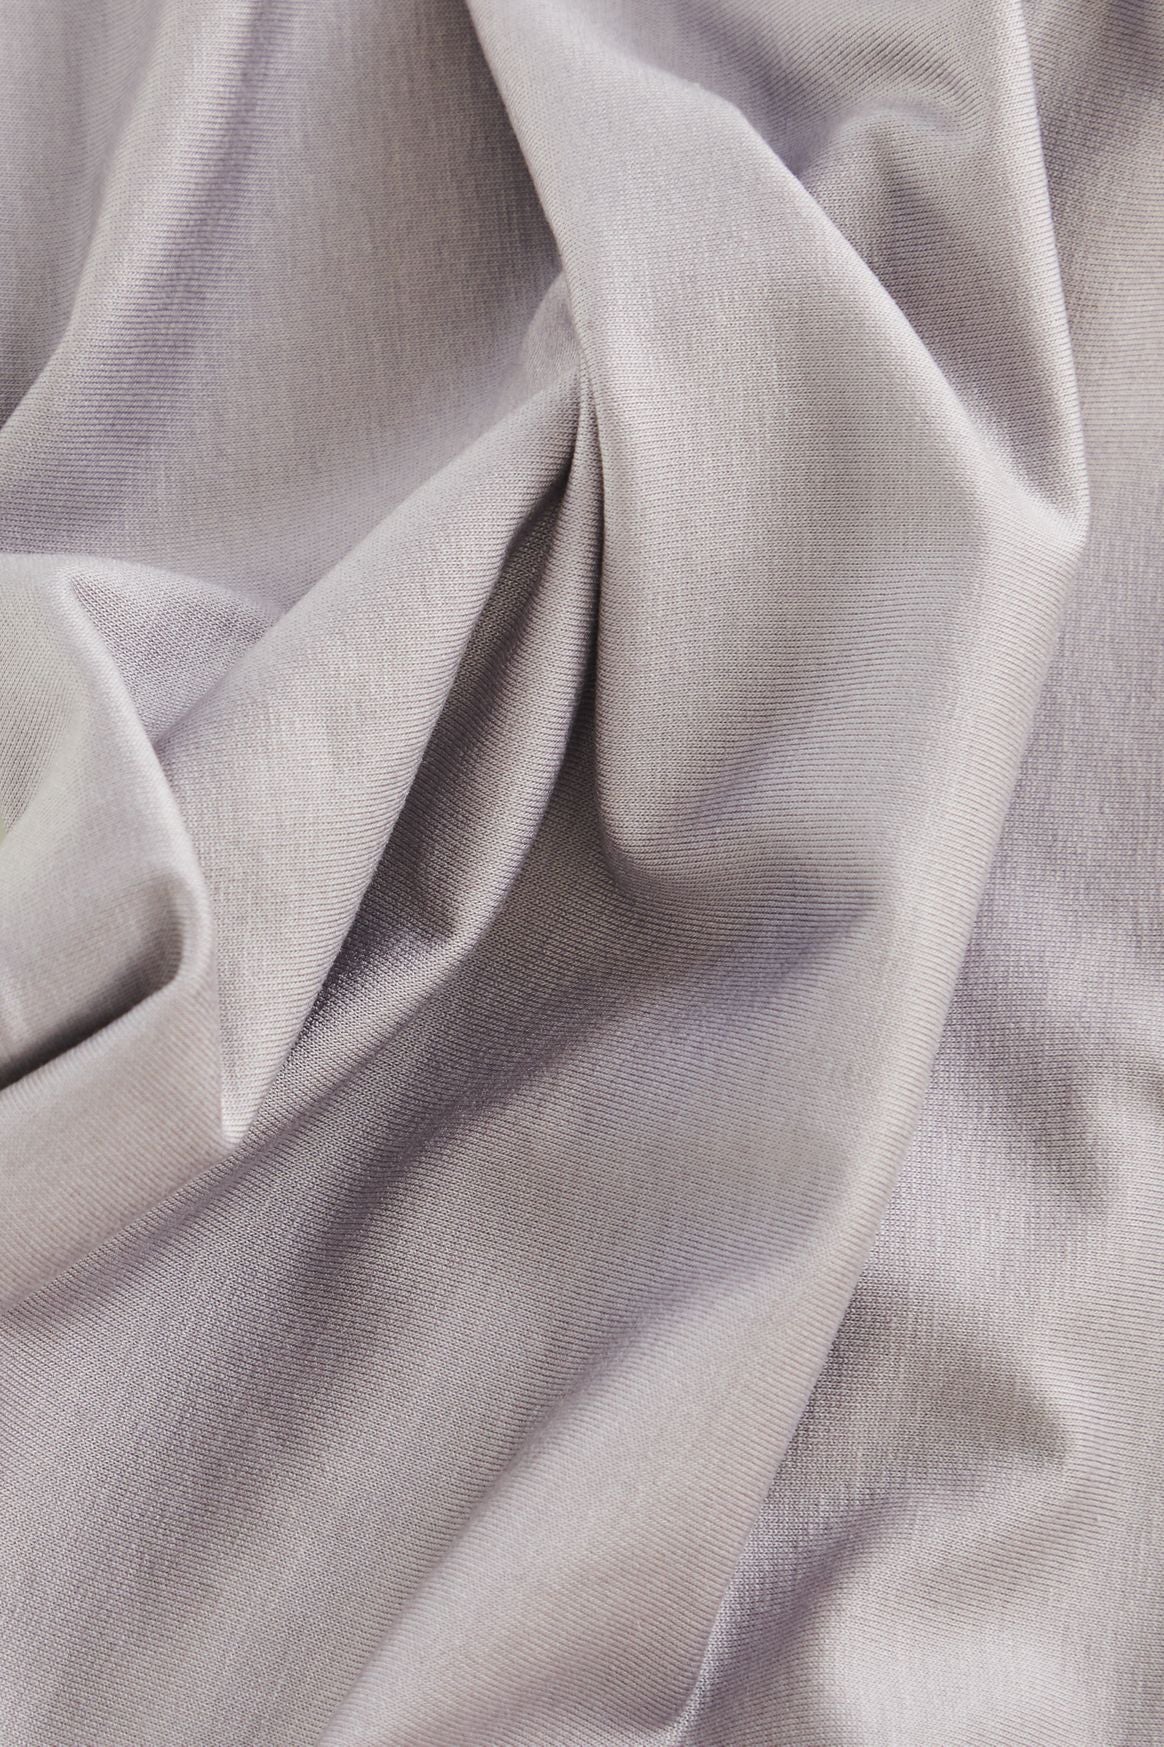 Meet MILK - Purple Haze Stretch Jersey with TENCEL™ fibers